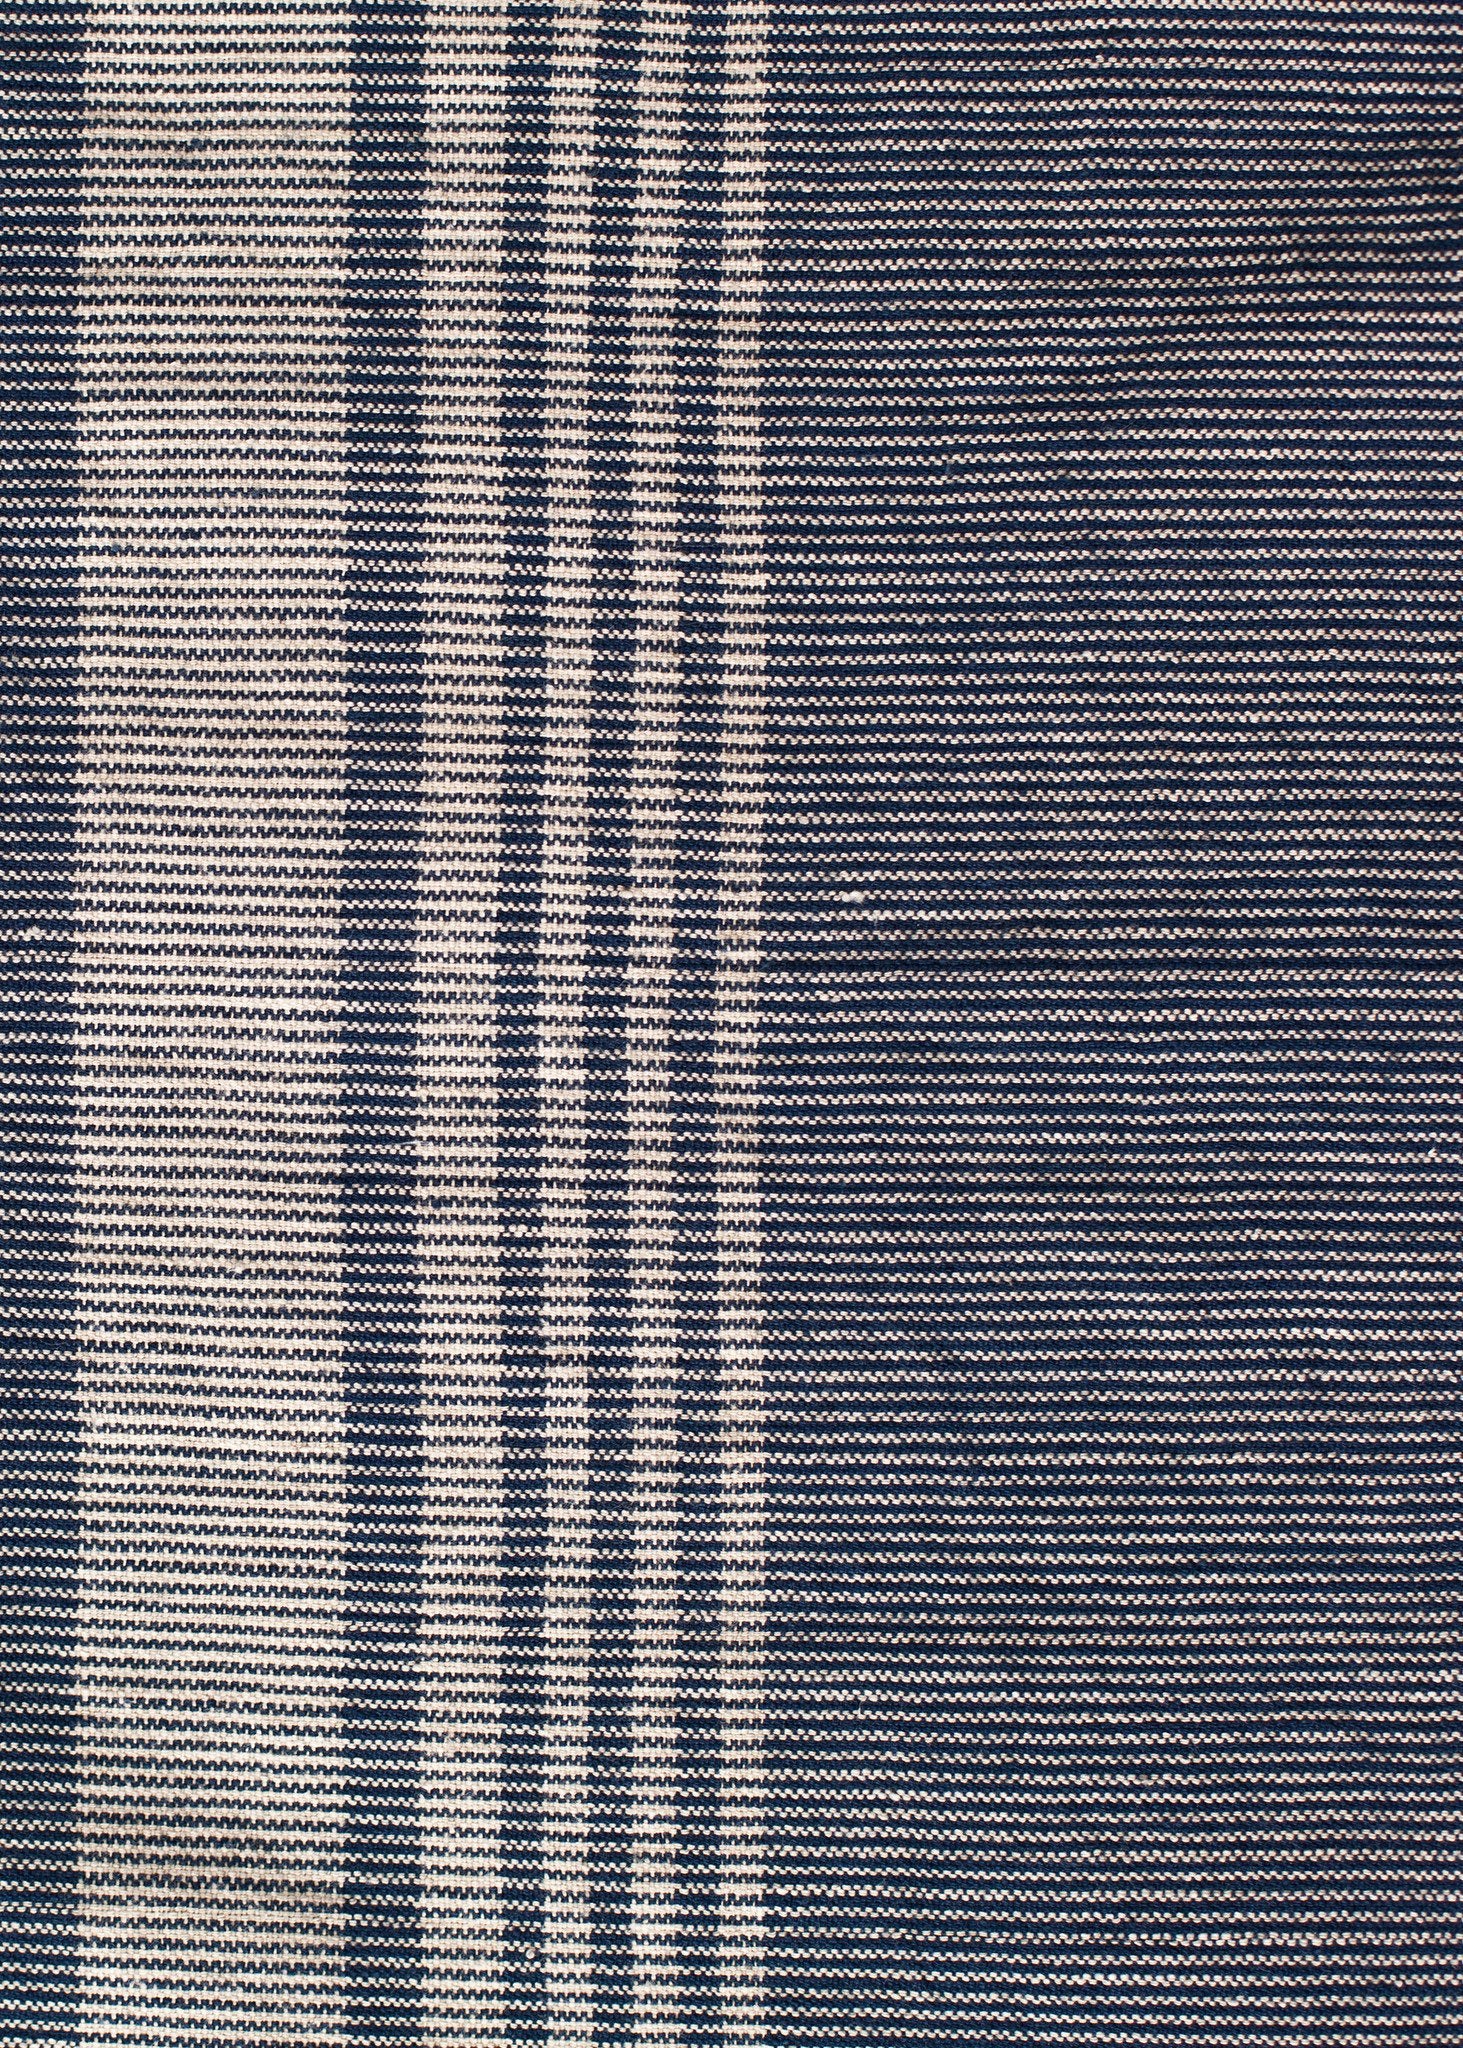 Stripe Textile